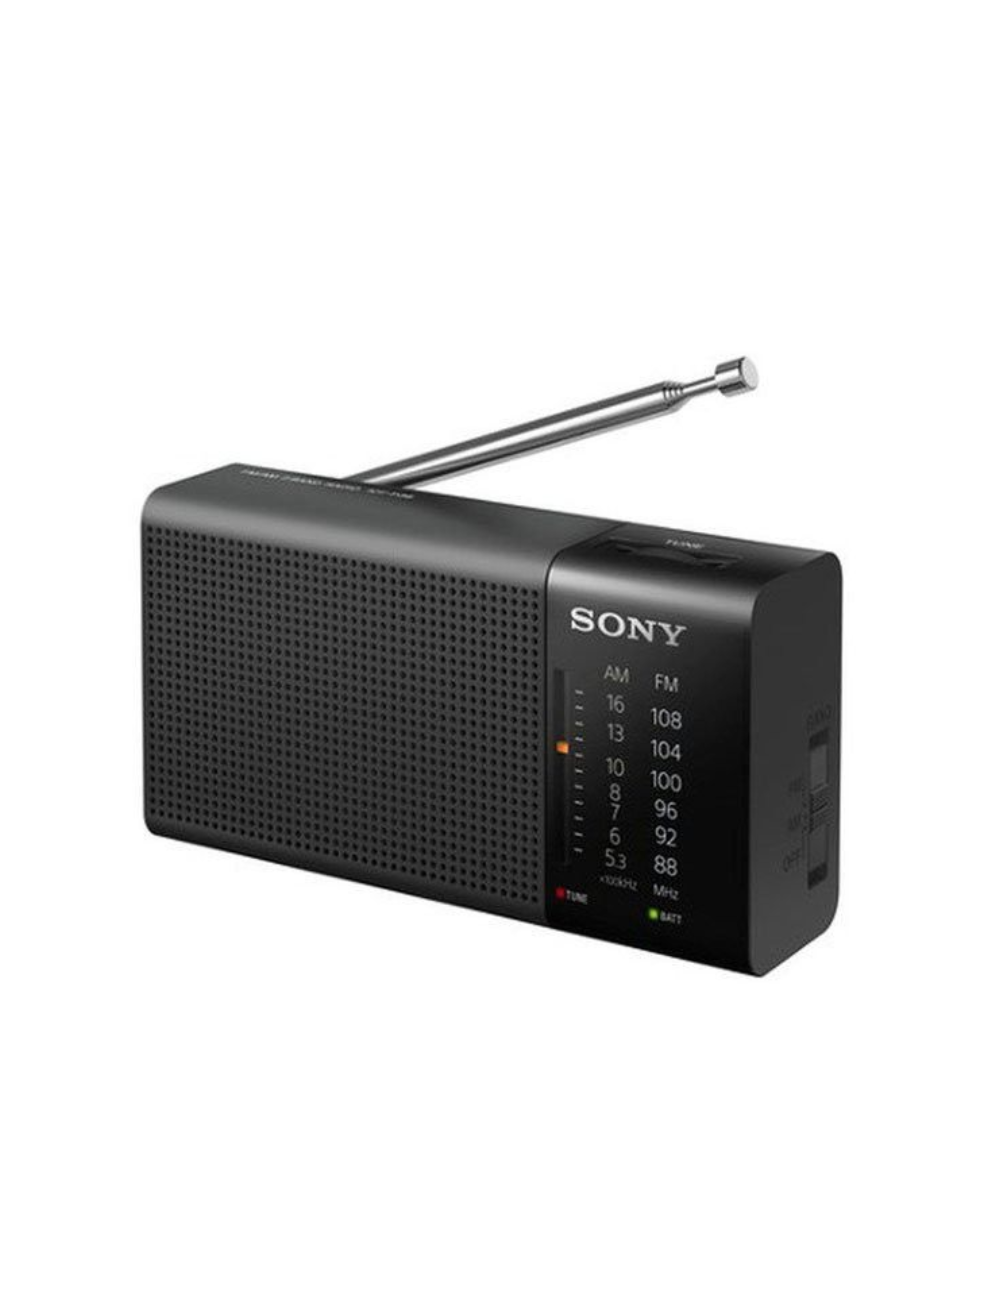 SONY RADIO PORTATIL ICFP36 NEGRO AM/FM Sony - 1